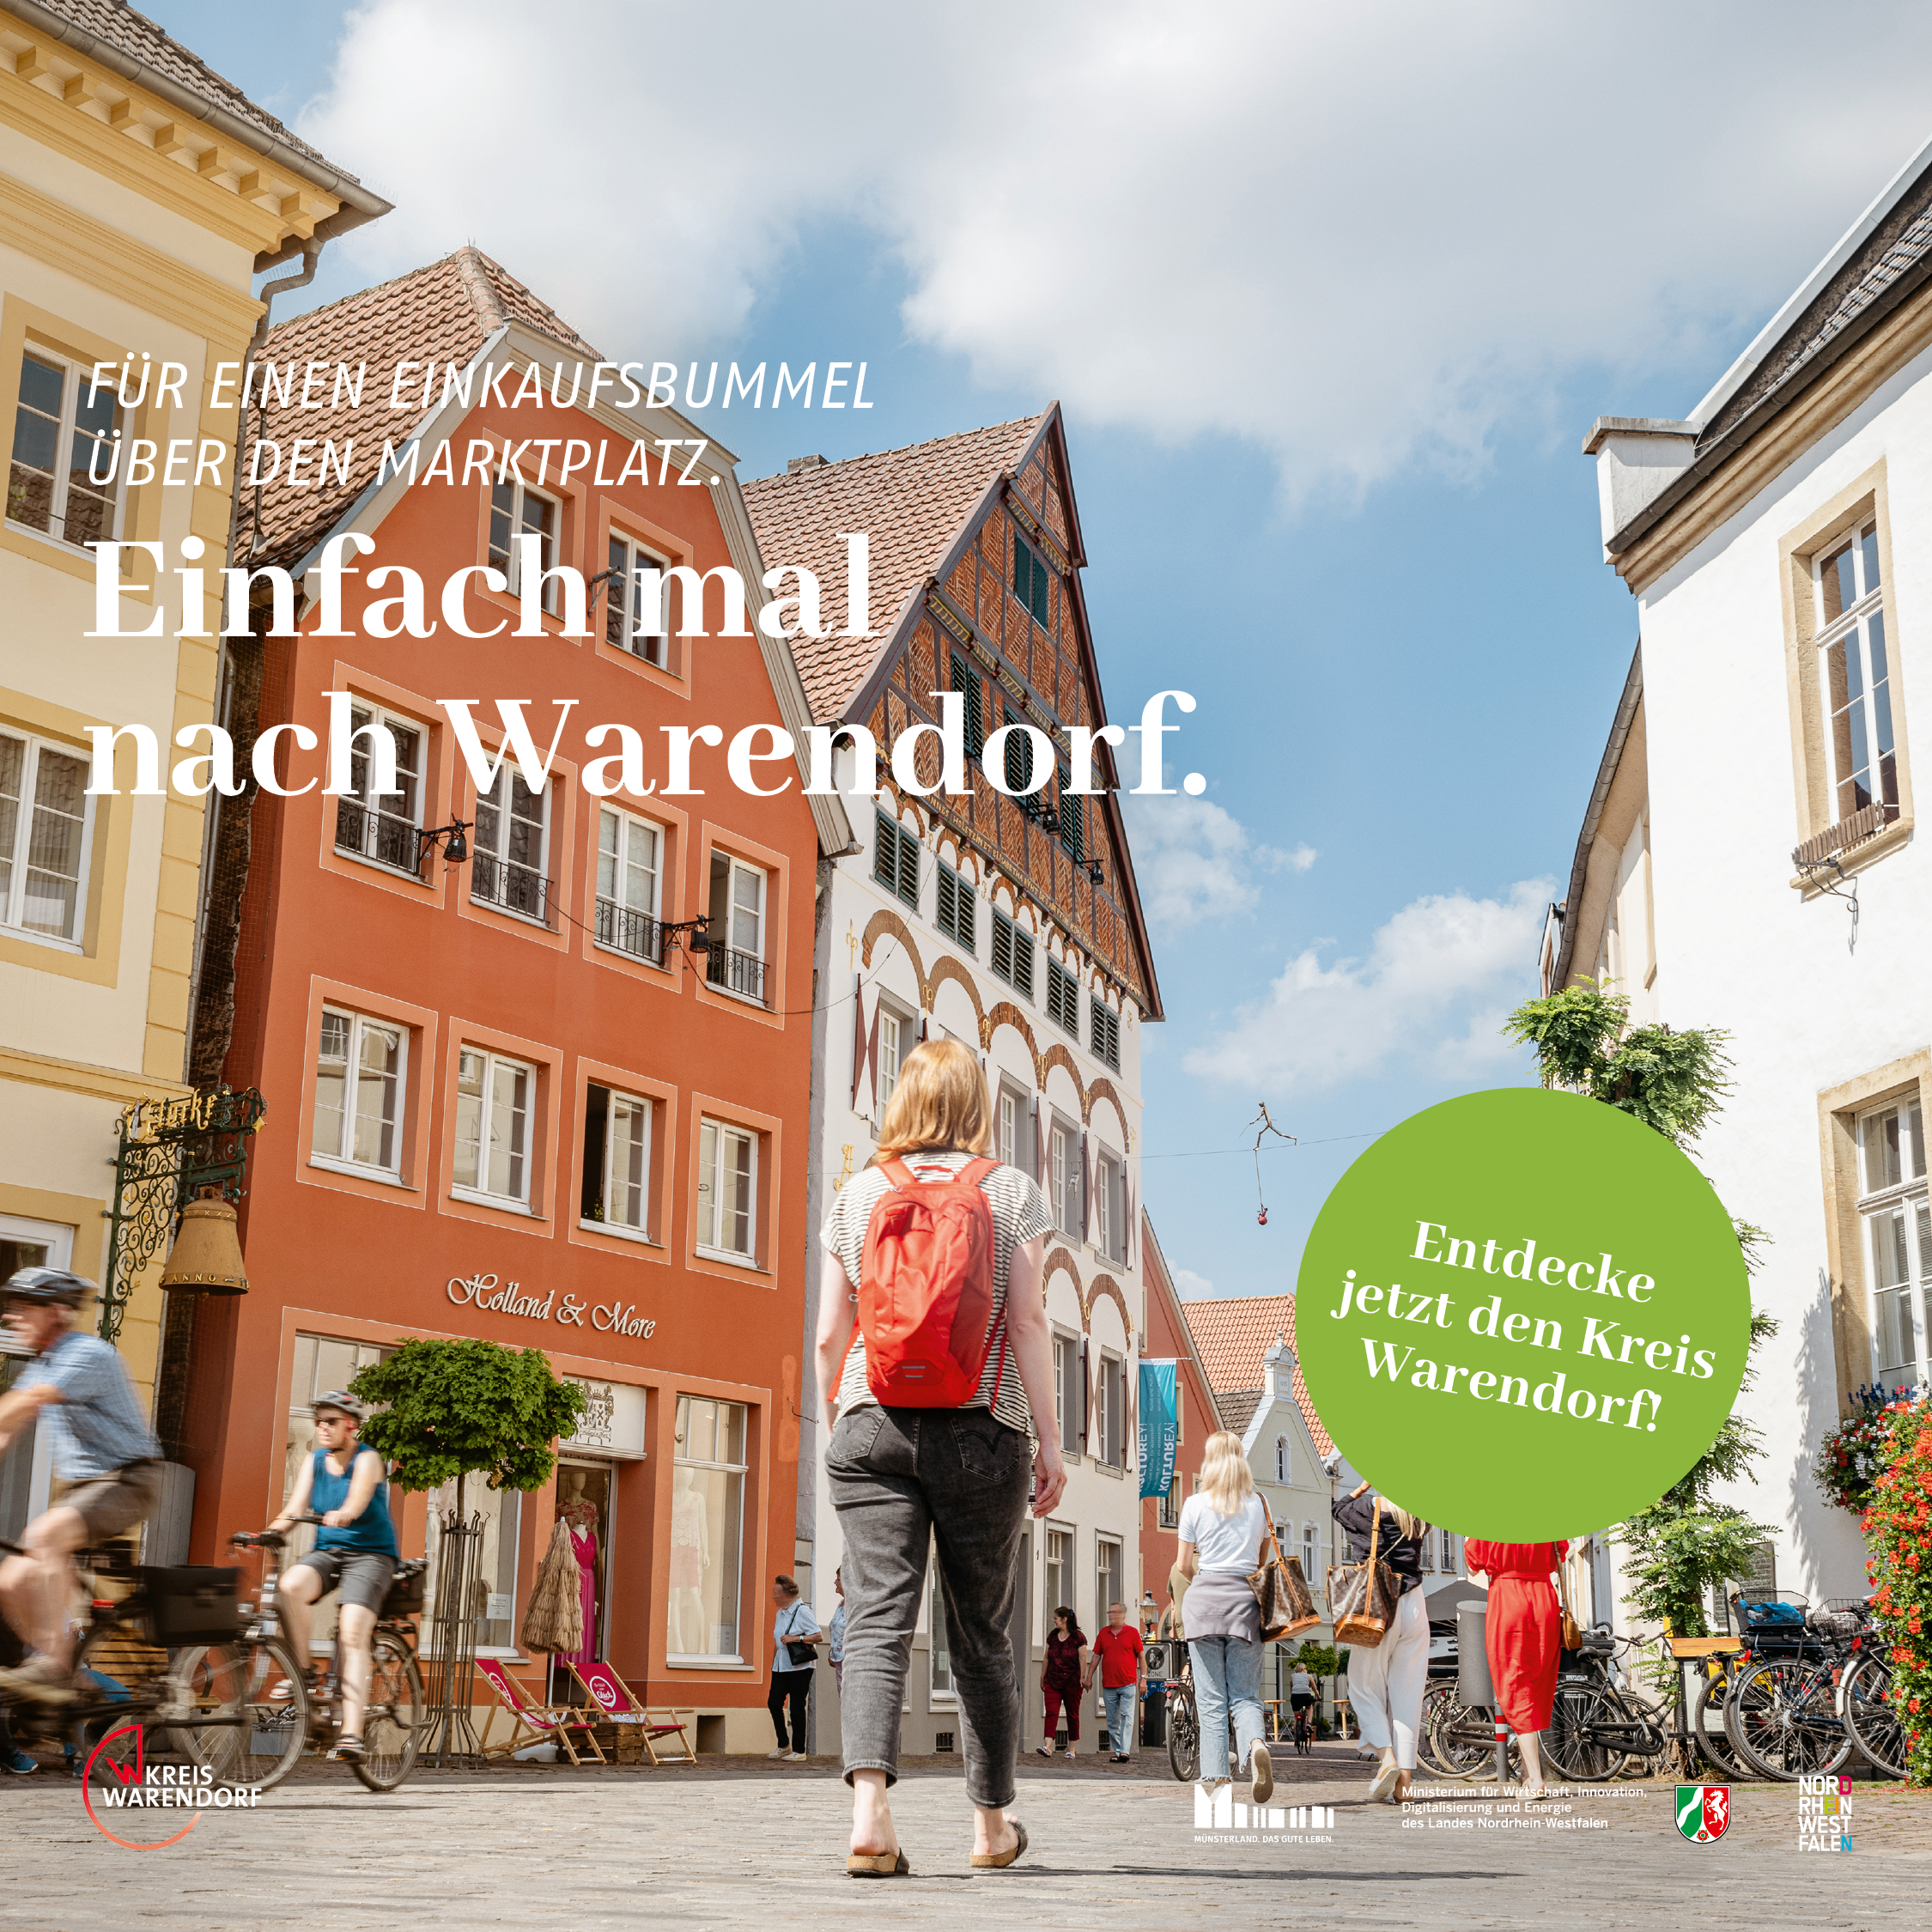 Imagekampagne: Kreis Warendorf kurbelt den Tourismus online erfolgreich an